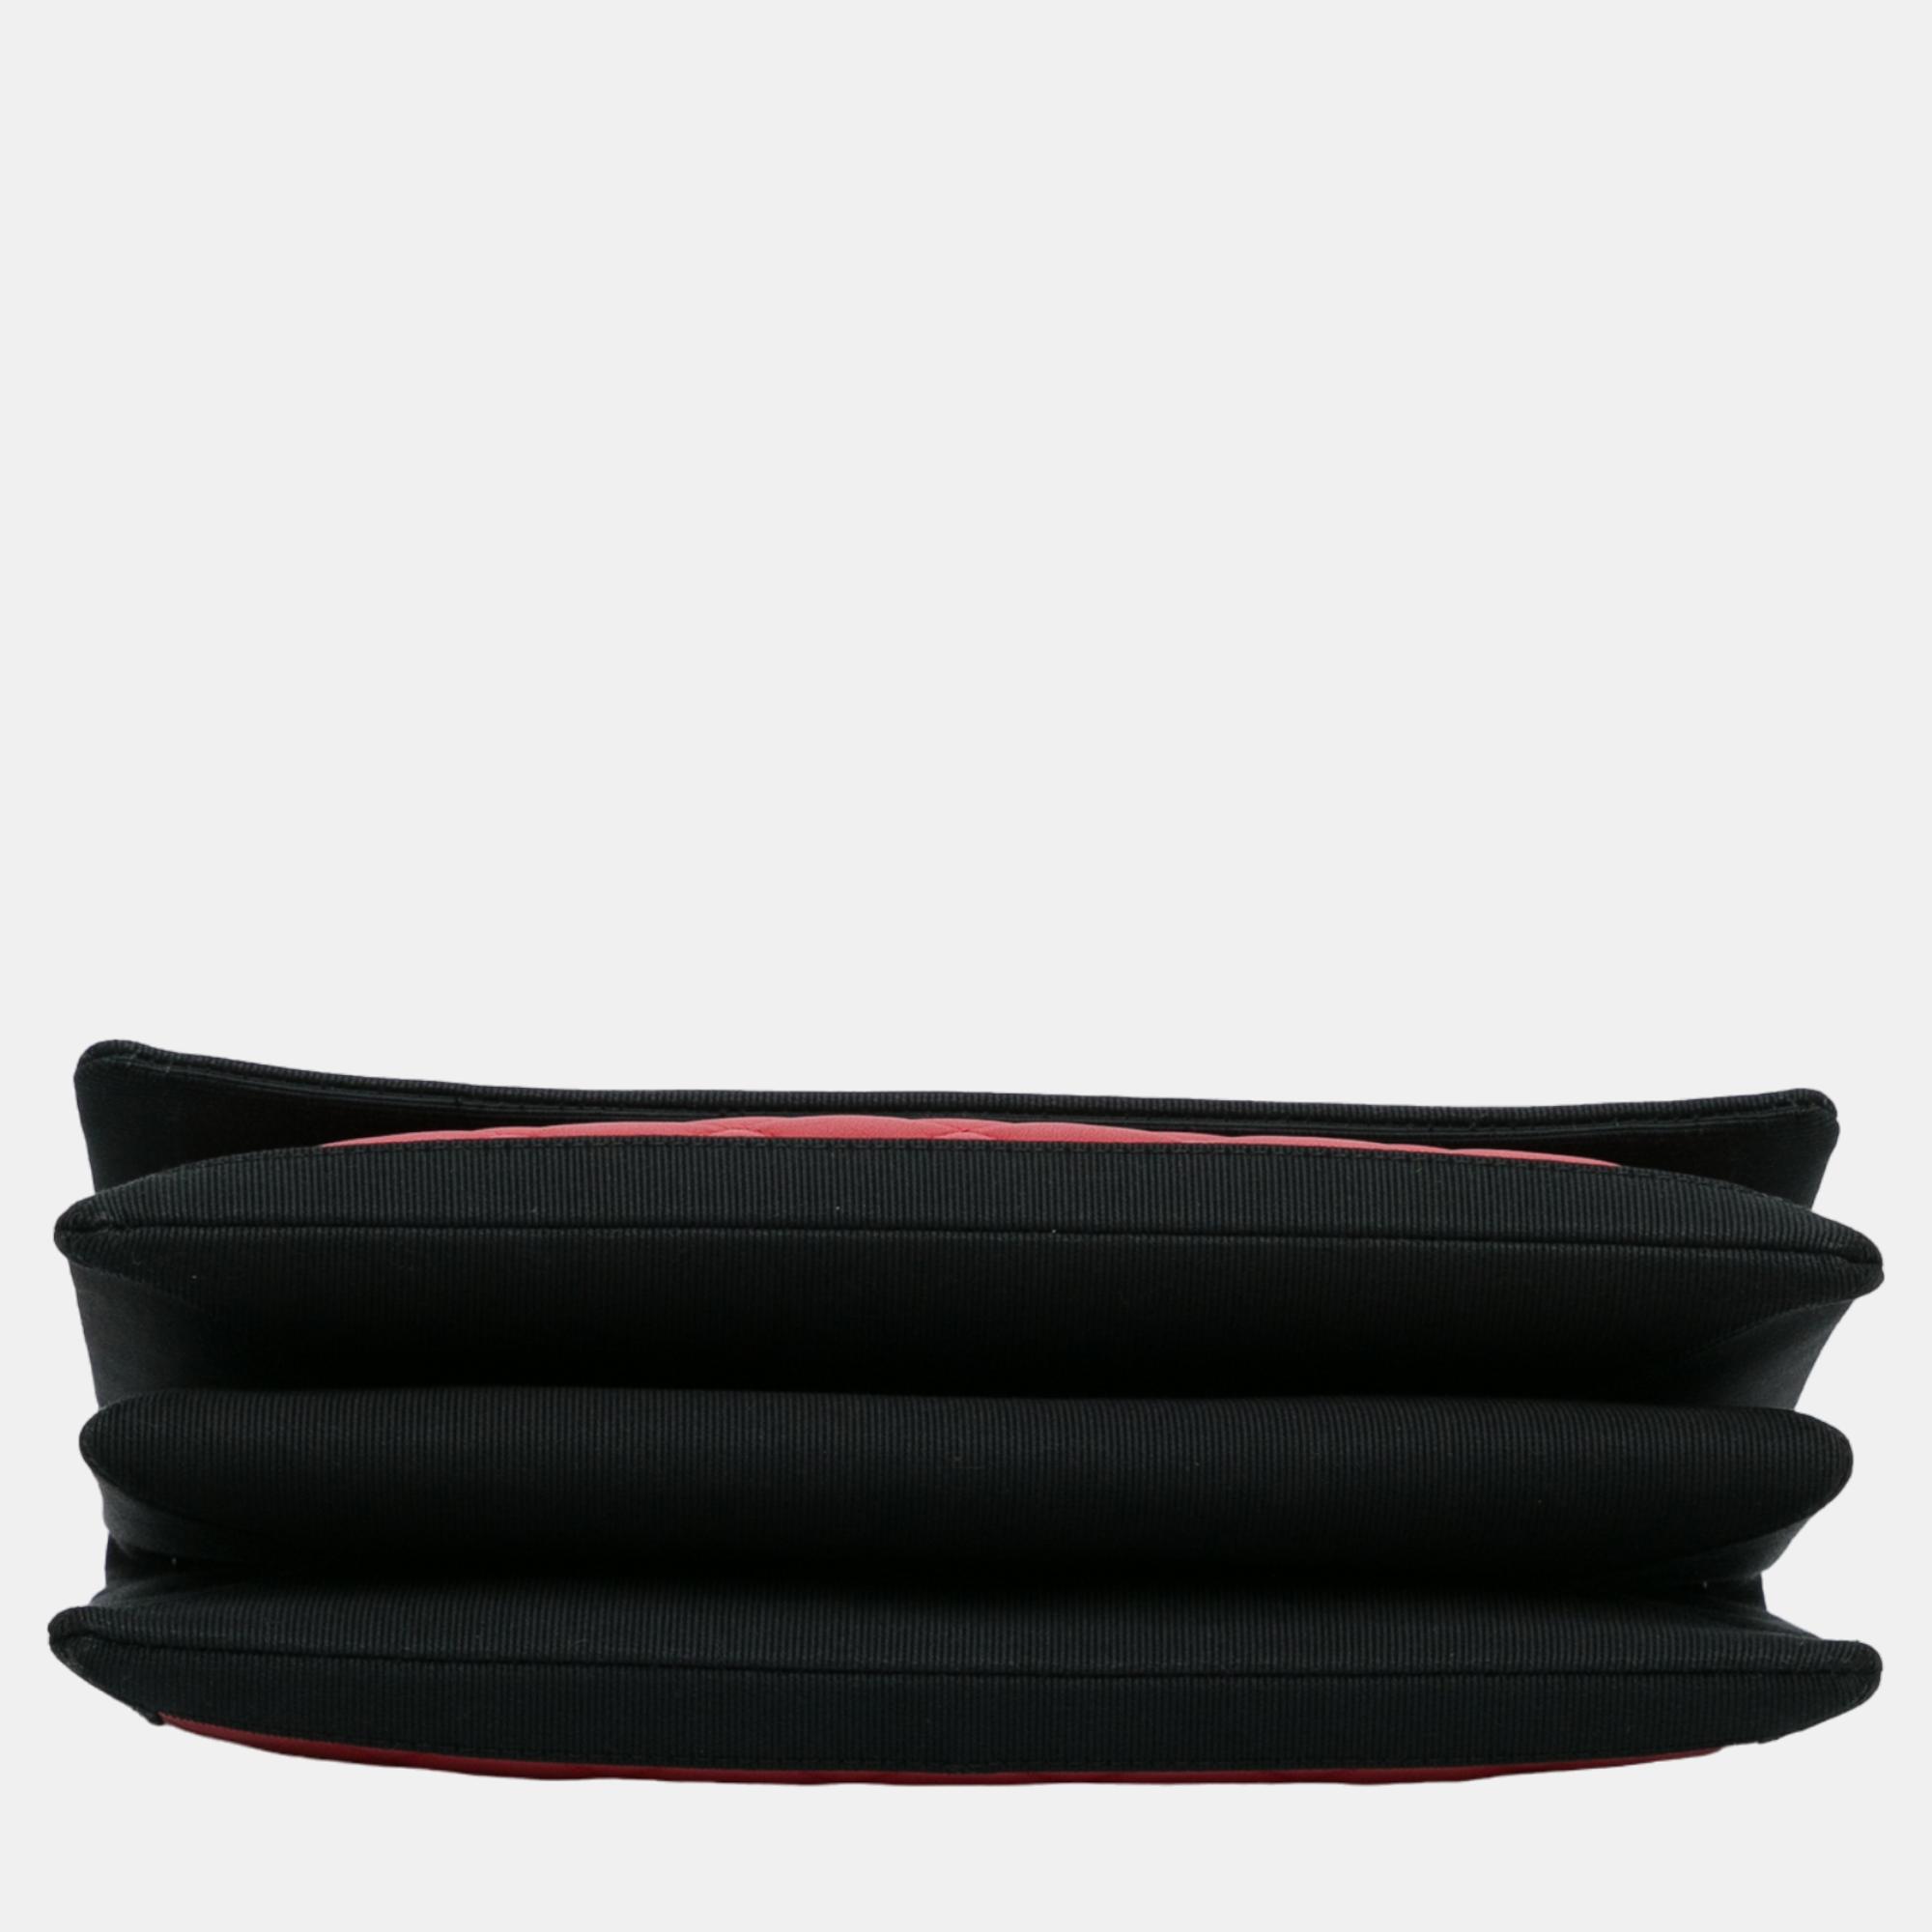 Chanel Black/Red CC Grossgrain Trim Lambskin Flap Shoulder Bag